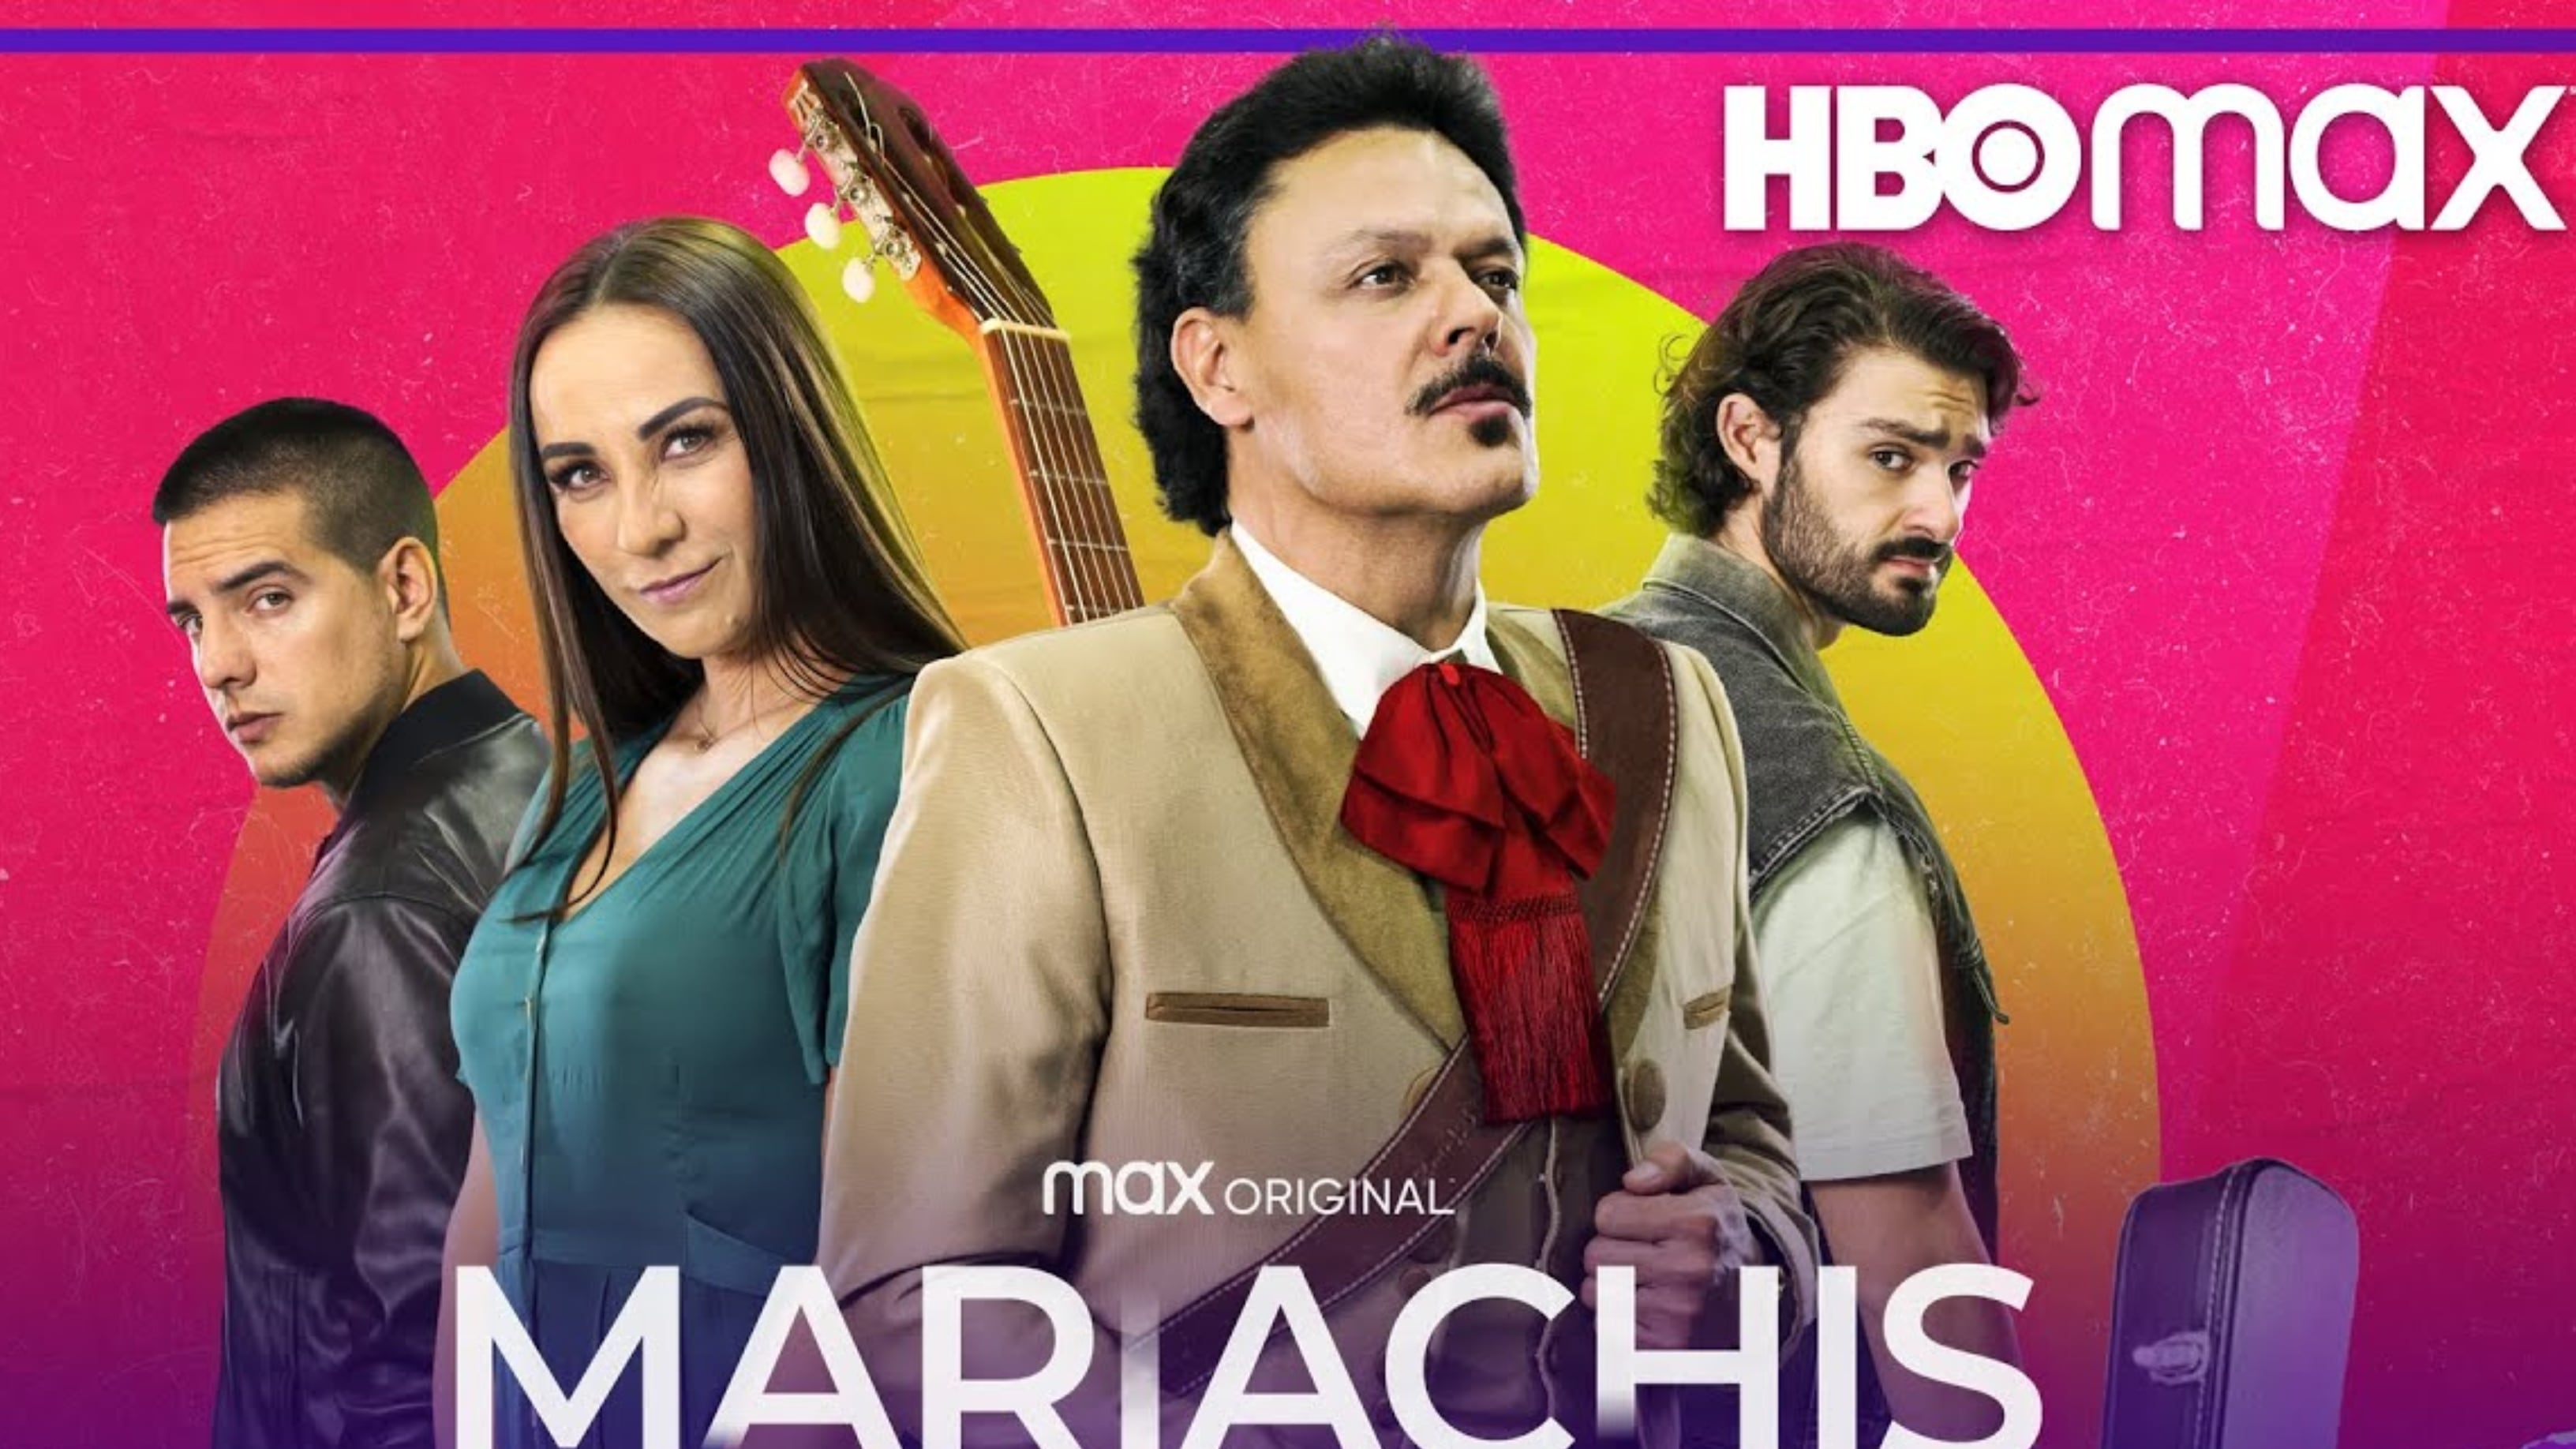 Mariachis, en HBO Max